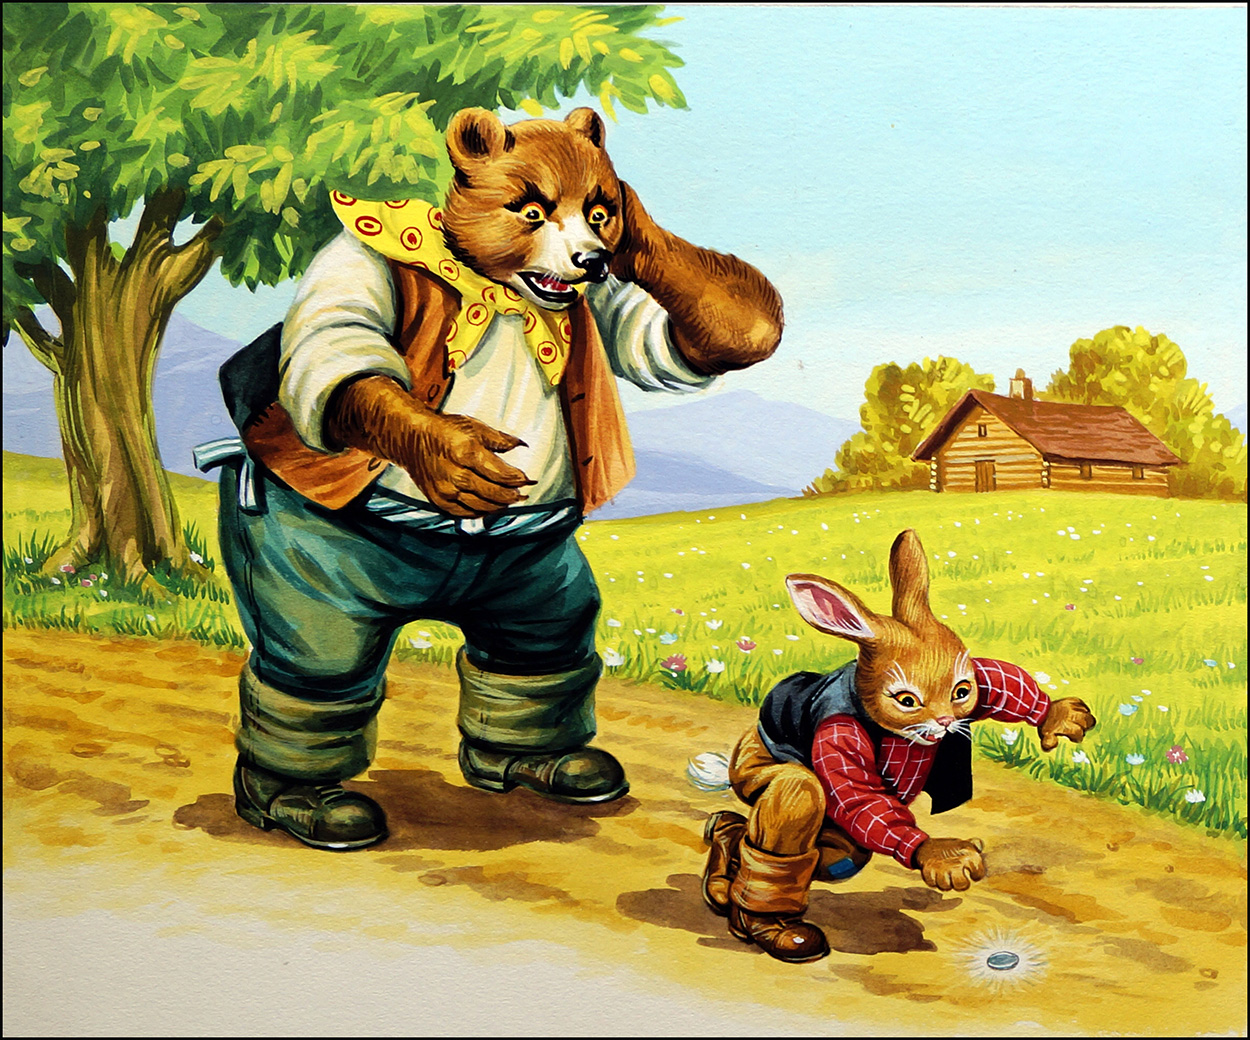 Brer Rabbit: Of All The Luck (Original) art by Henry Fox at The Illustration Art Gallery